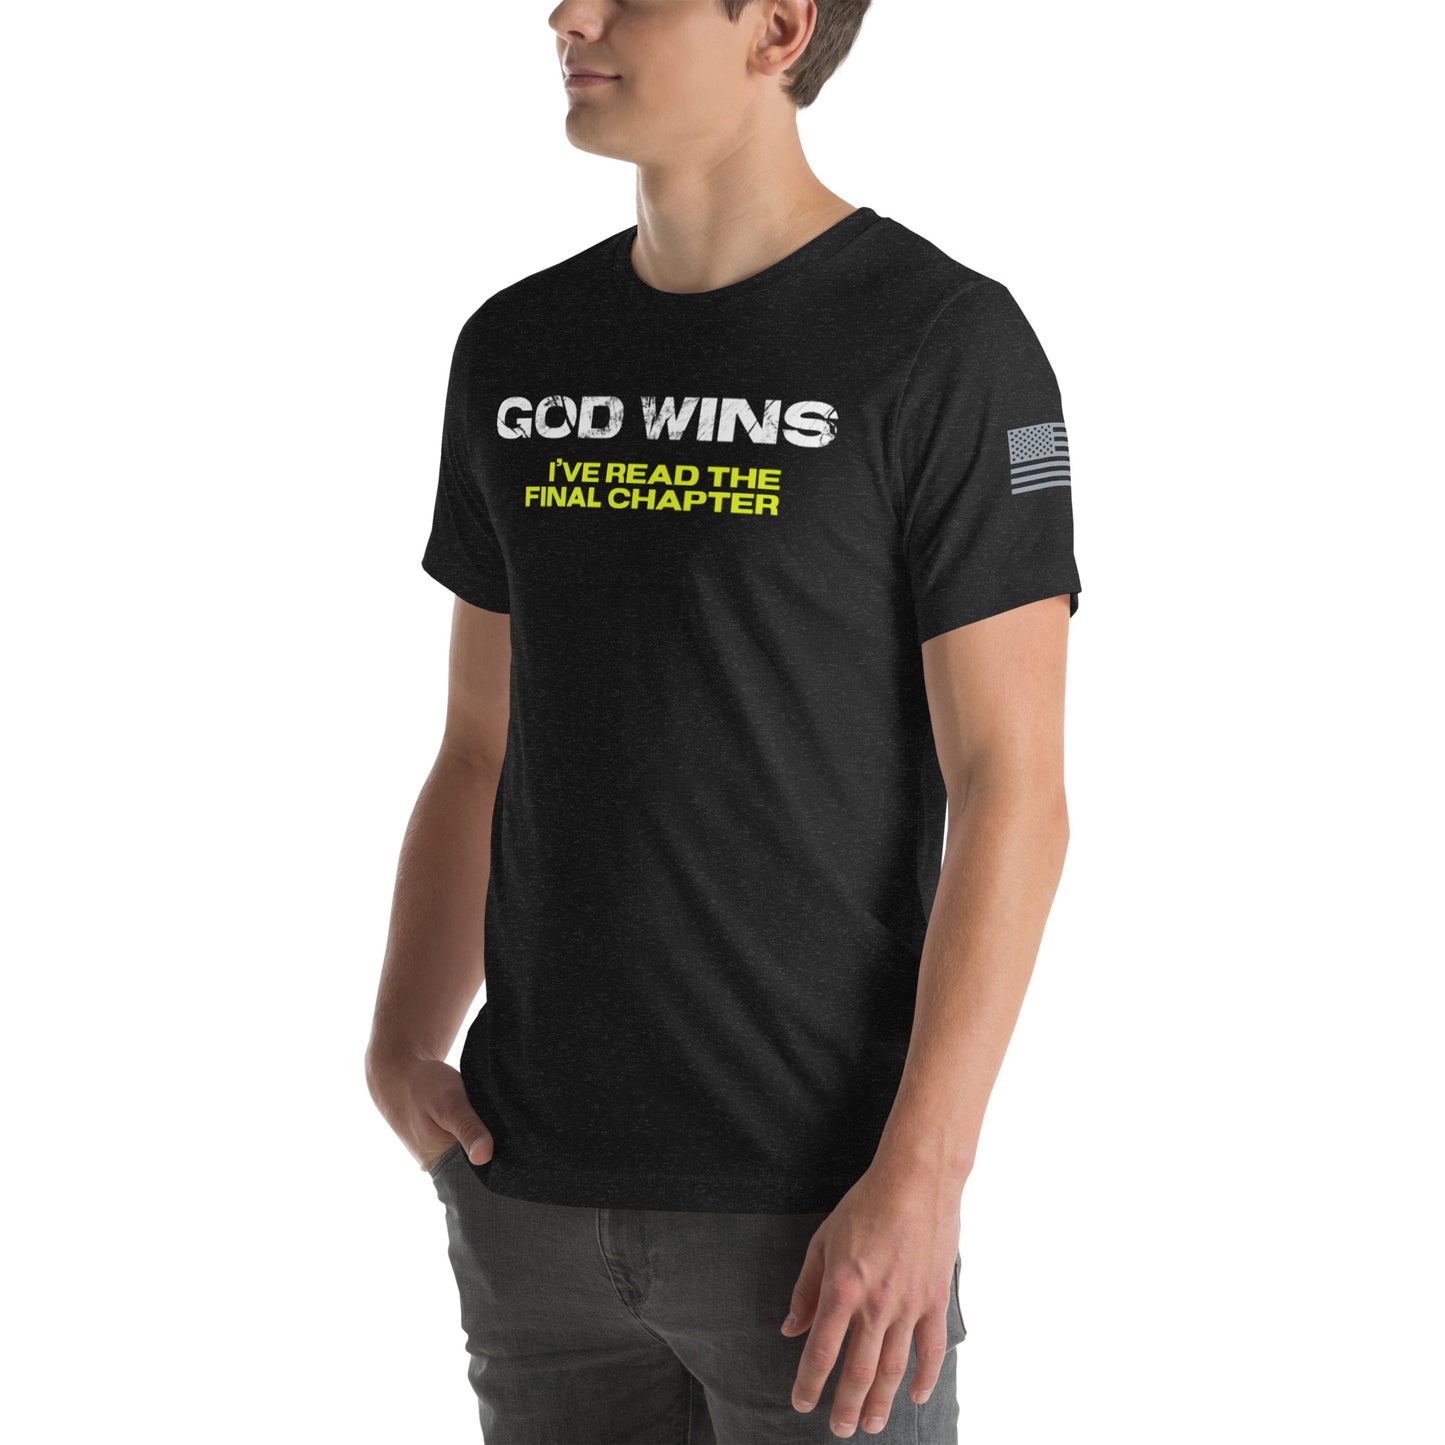 God Wins t-shirt